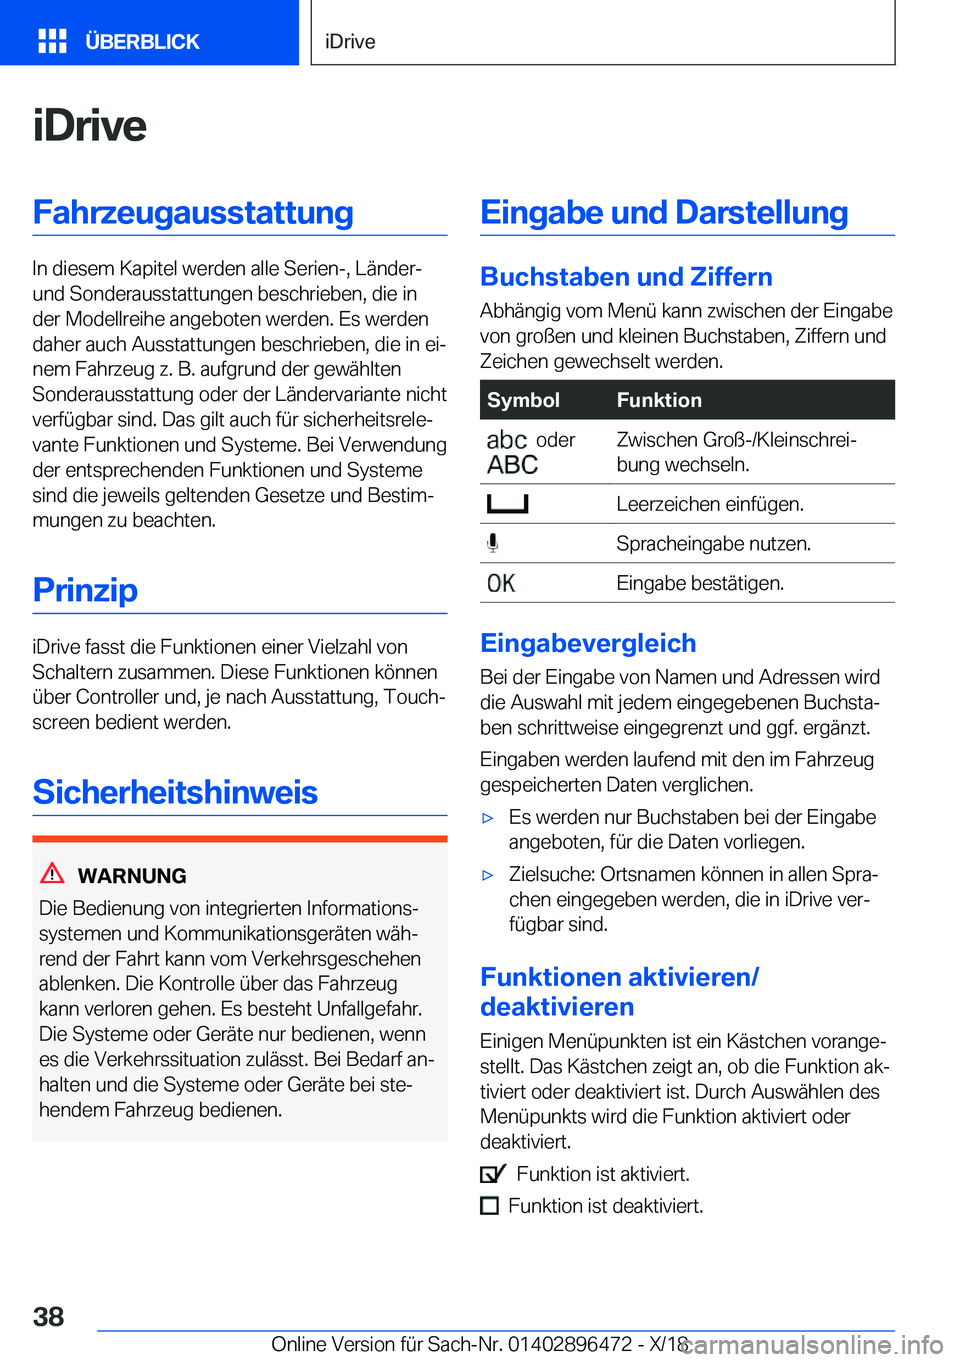 BMW X1 2019  Betriebsanleitungen (in German) �i�D�r�i�v�e�F�a�h�r�z�e�u�g�a�u�s�s�t�a�t�t�u�n�g
�I�n��d�i�e�s�e�m��K�a�p�i�t�e�l��w�e�r�d�e�n��a�l�l�e��S�e�r�i�e�n�-�,��L�